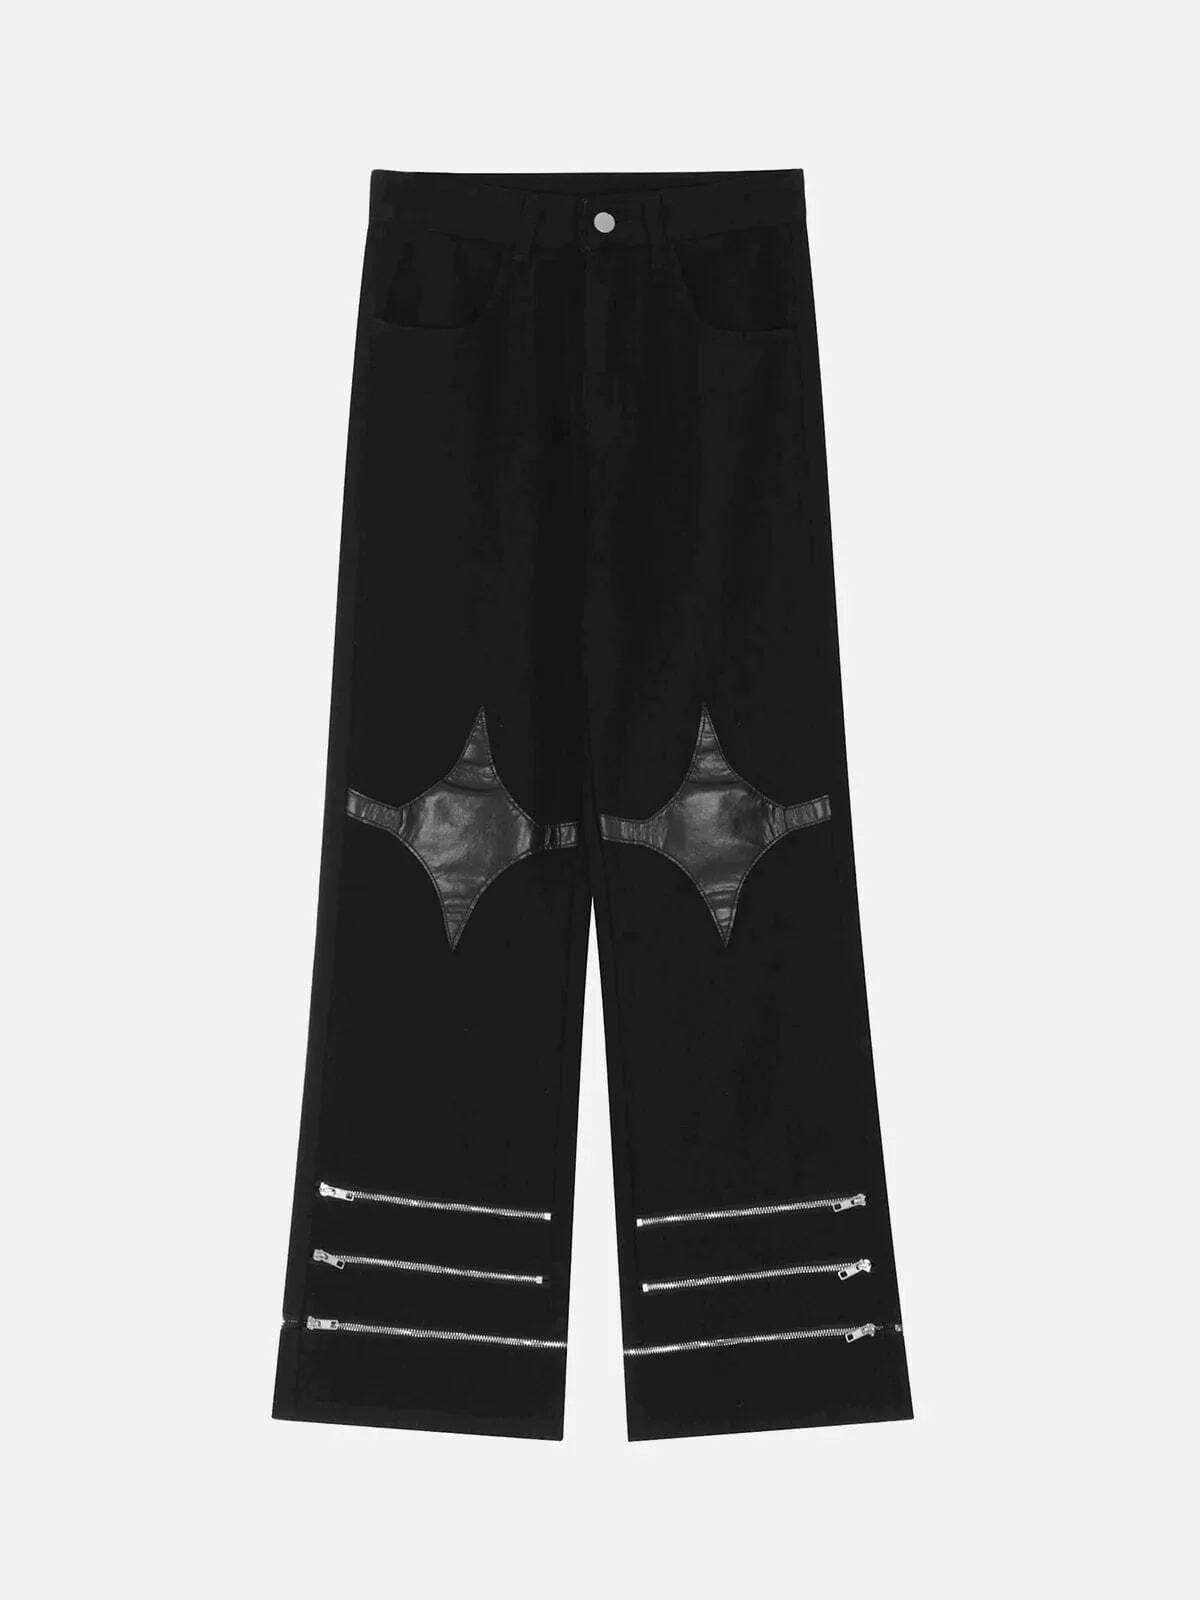 edgy leather panel zip jeans sleek streetwear 3131